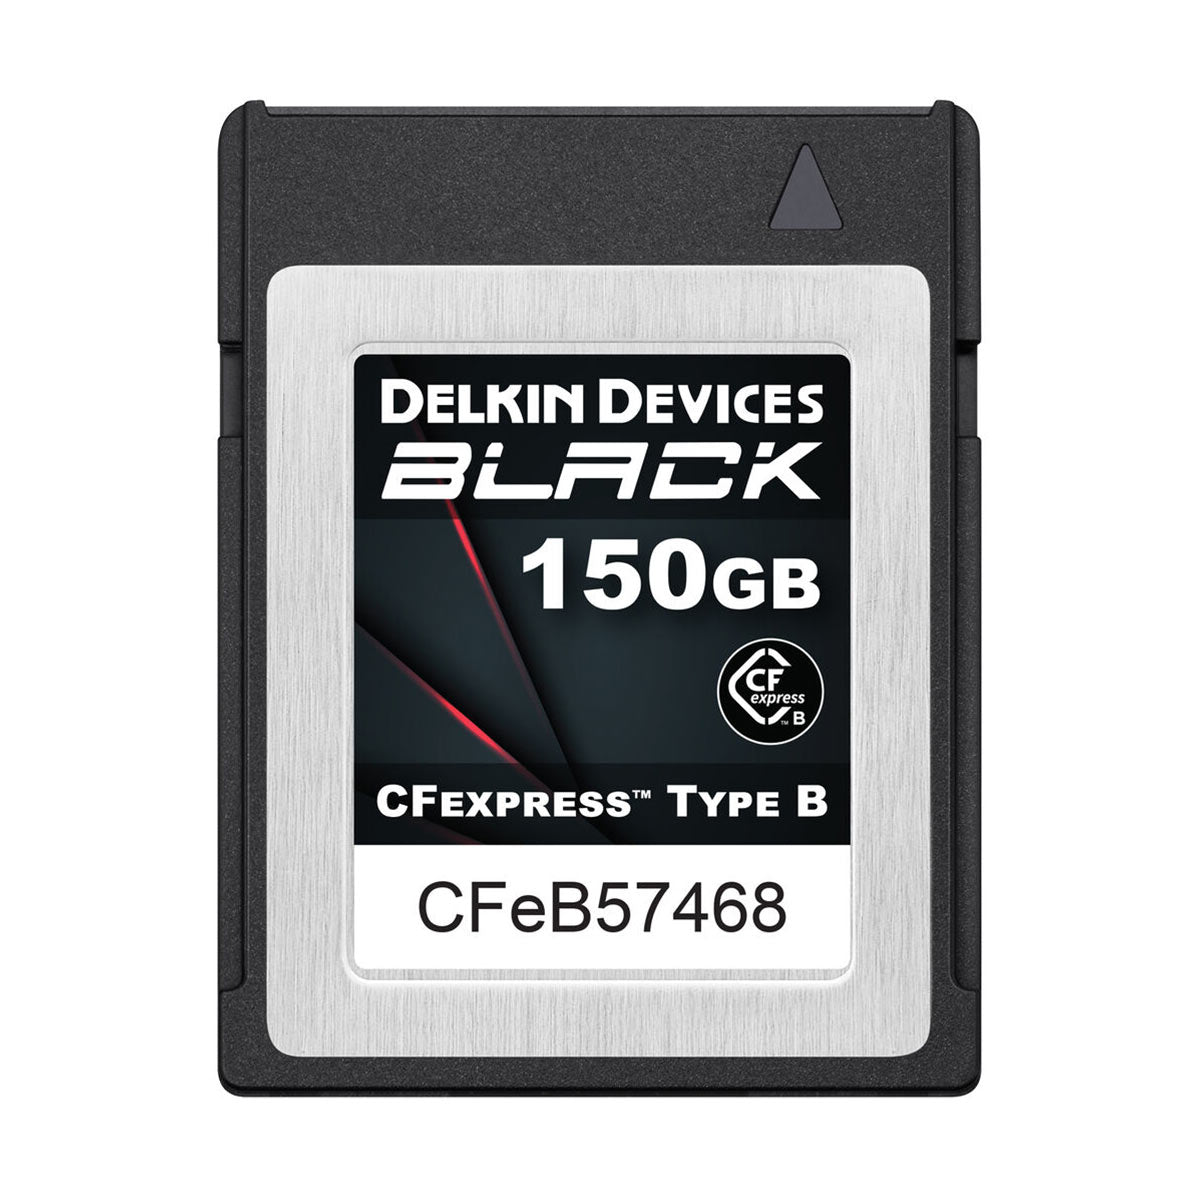 Delkin BLACK 150GB CFexpress Type B Memory Card